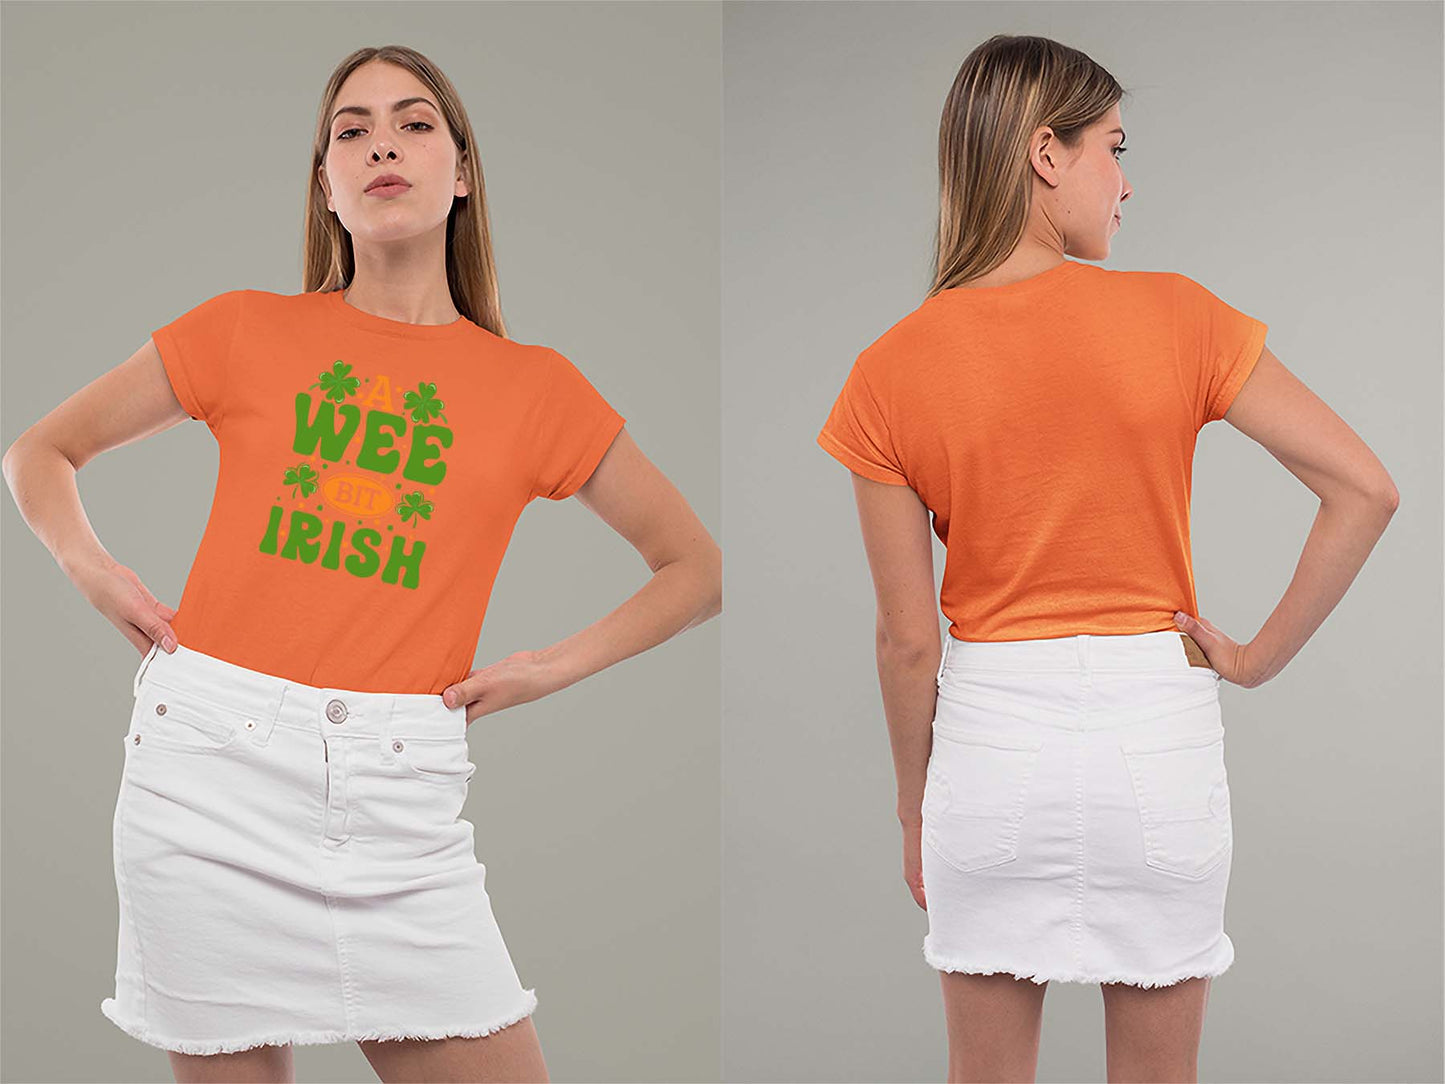 A Wee Bit Irish Ladies Crew (Round) Neck Shirt Small Orange